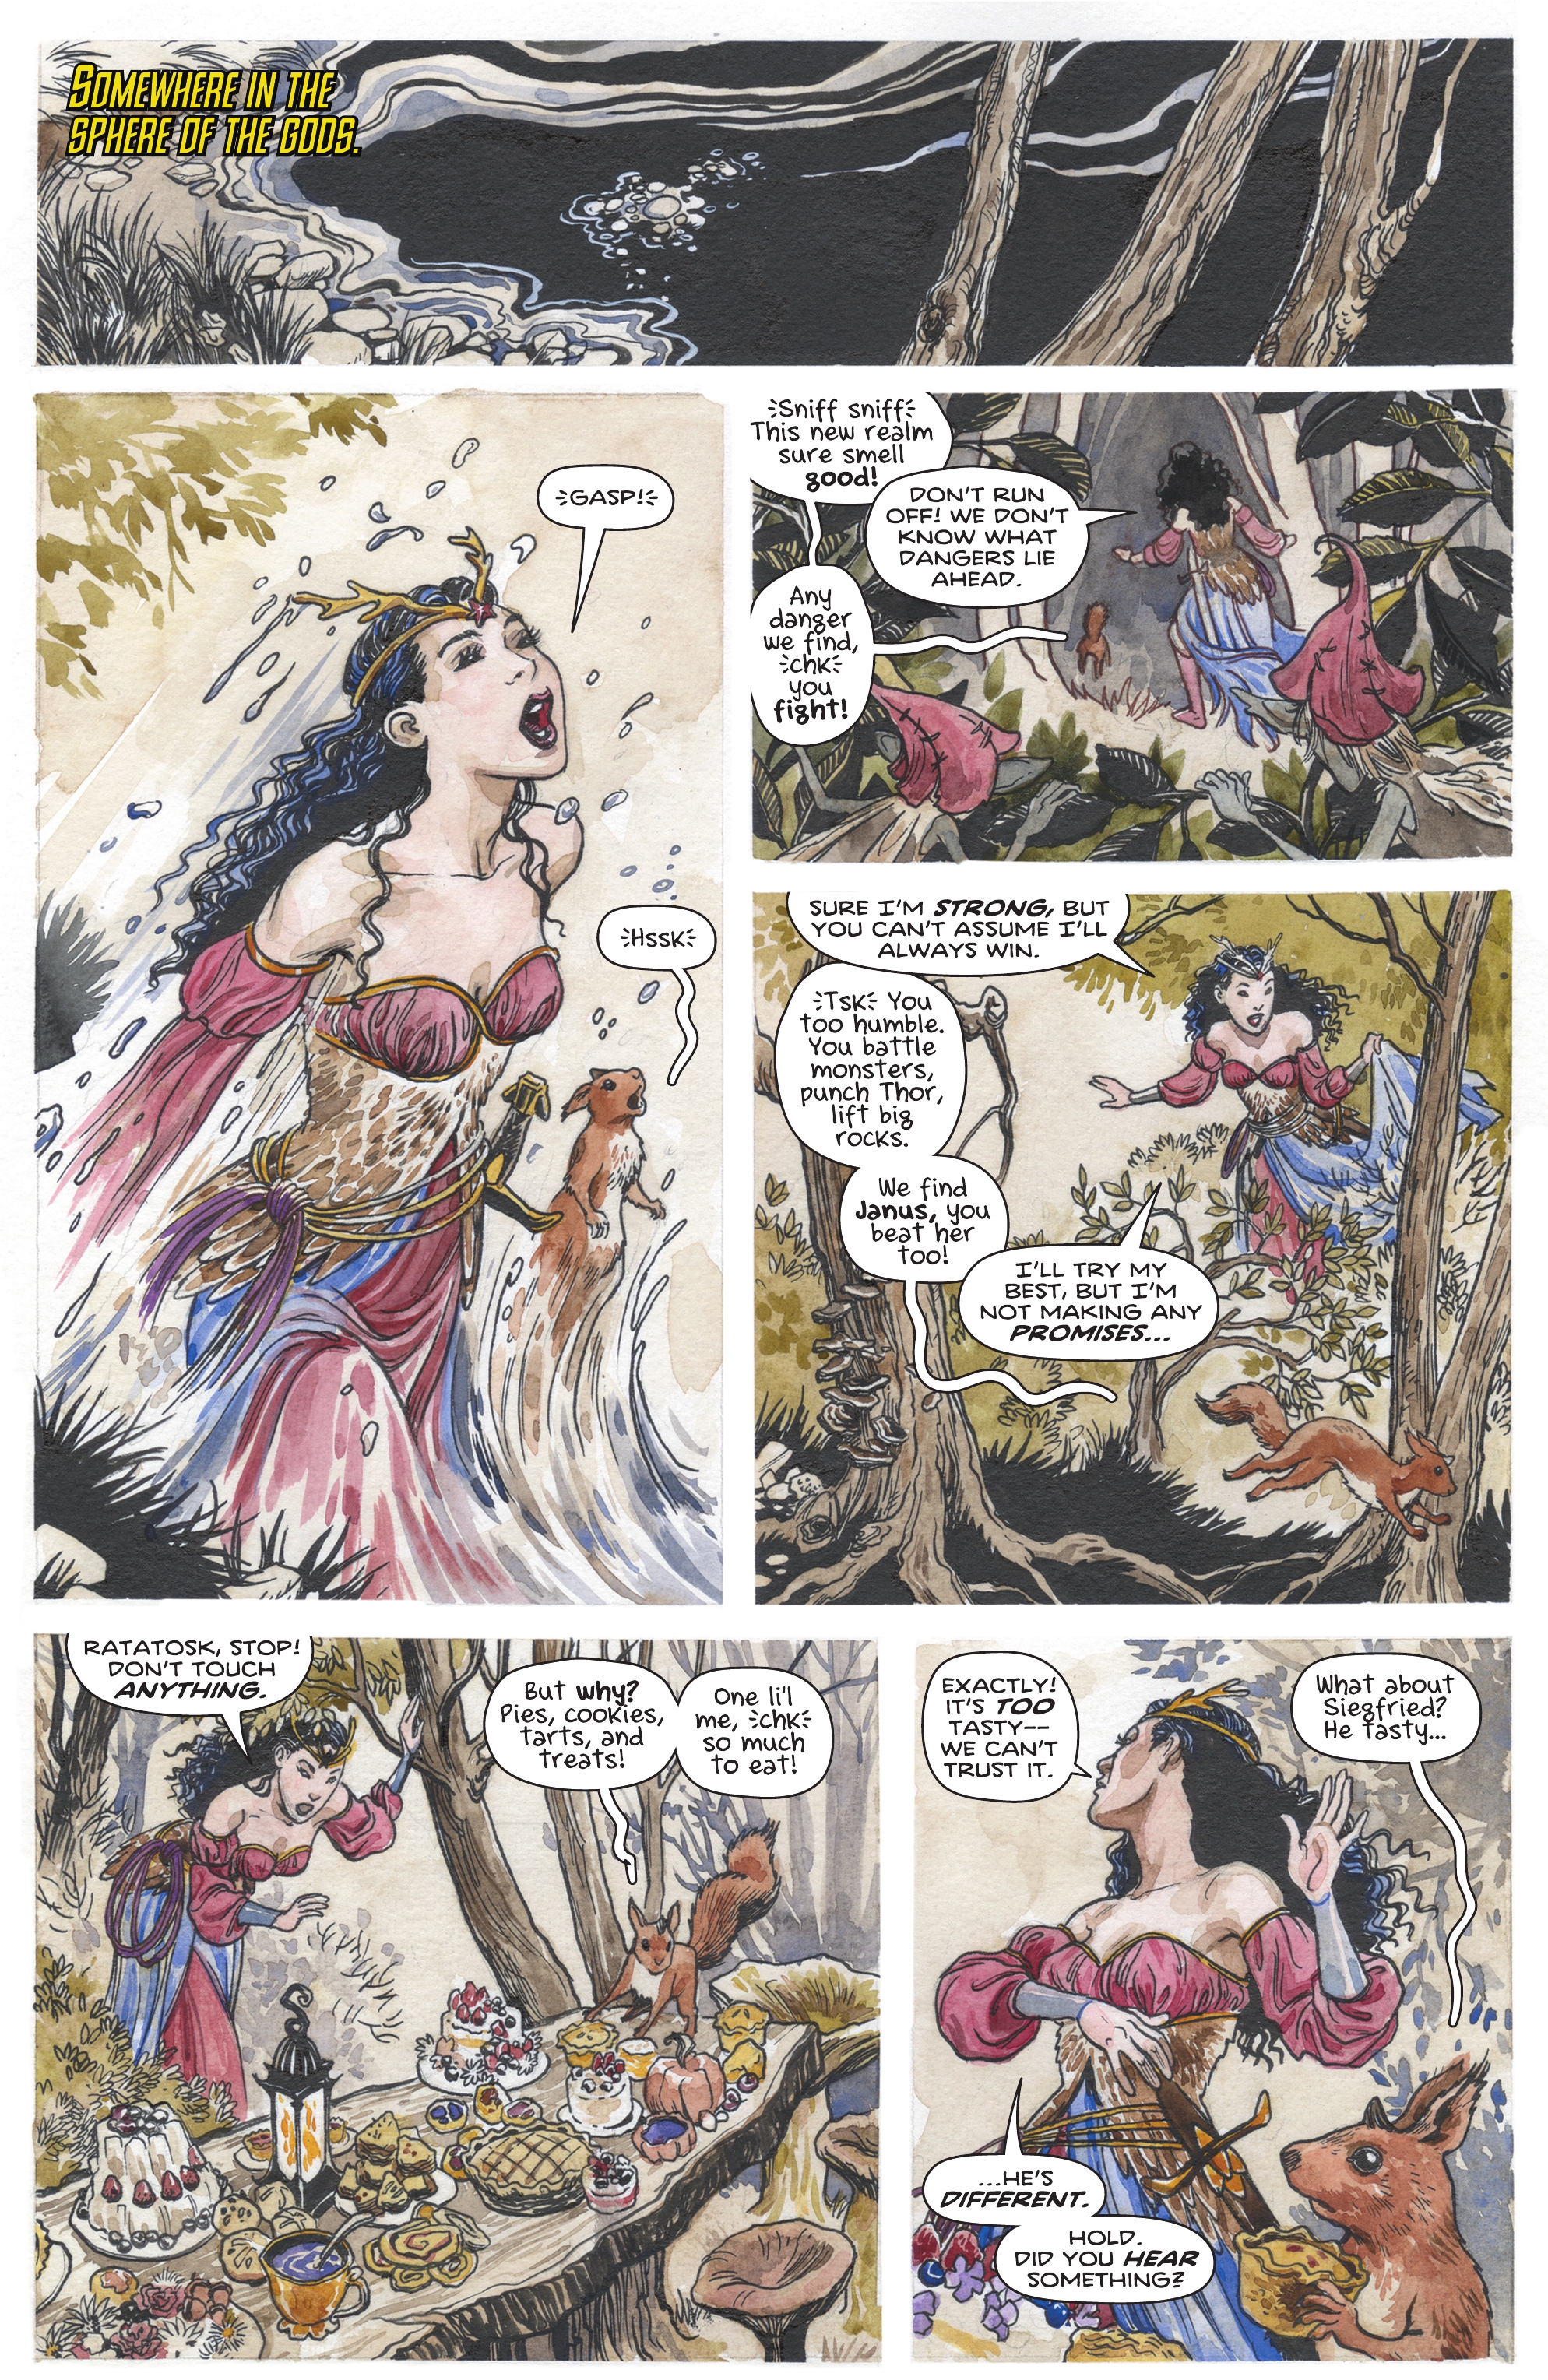 Wonder Woman (2016-): Chapter 776 - Page 3